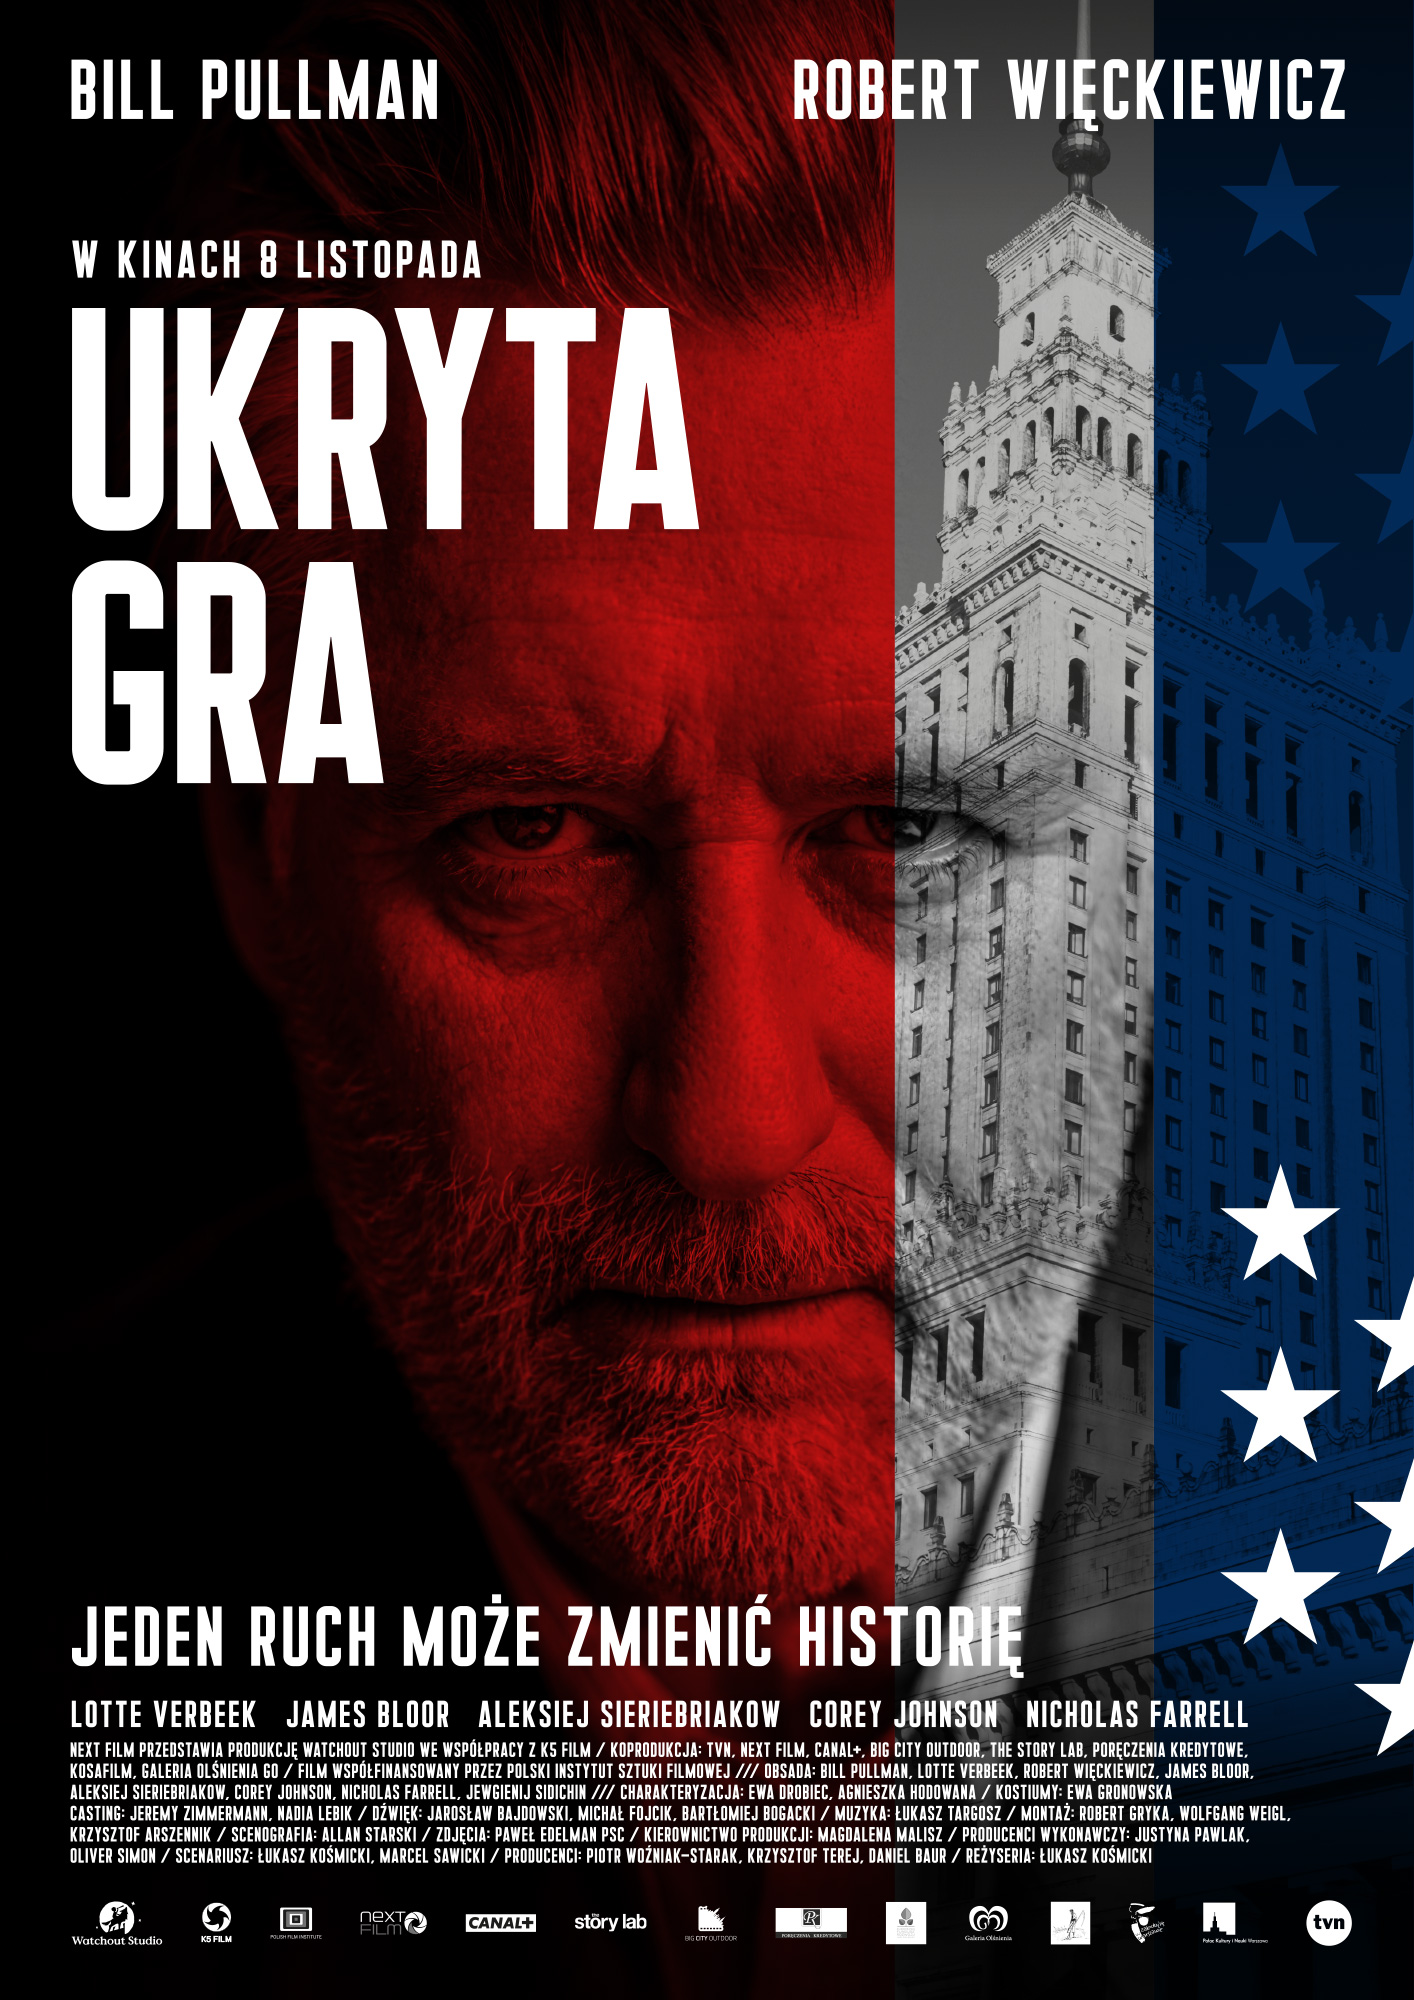 UKRYTA GRA Next Film